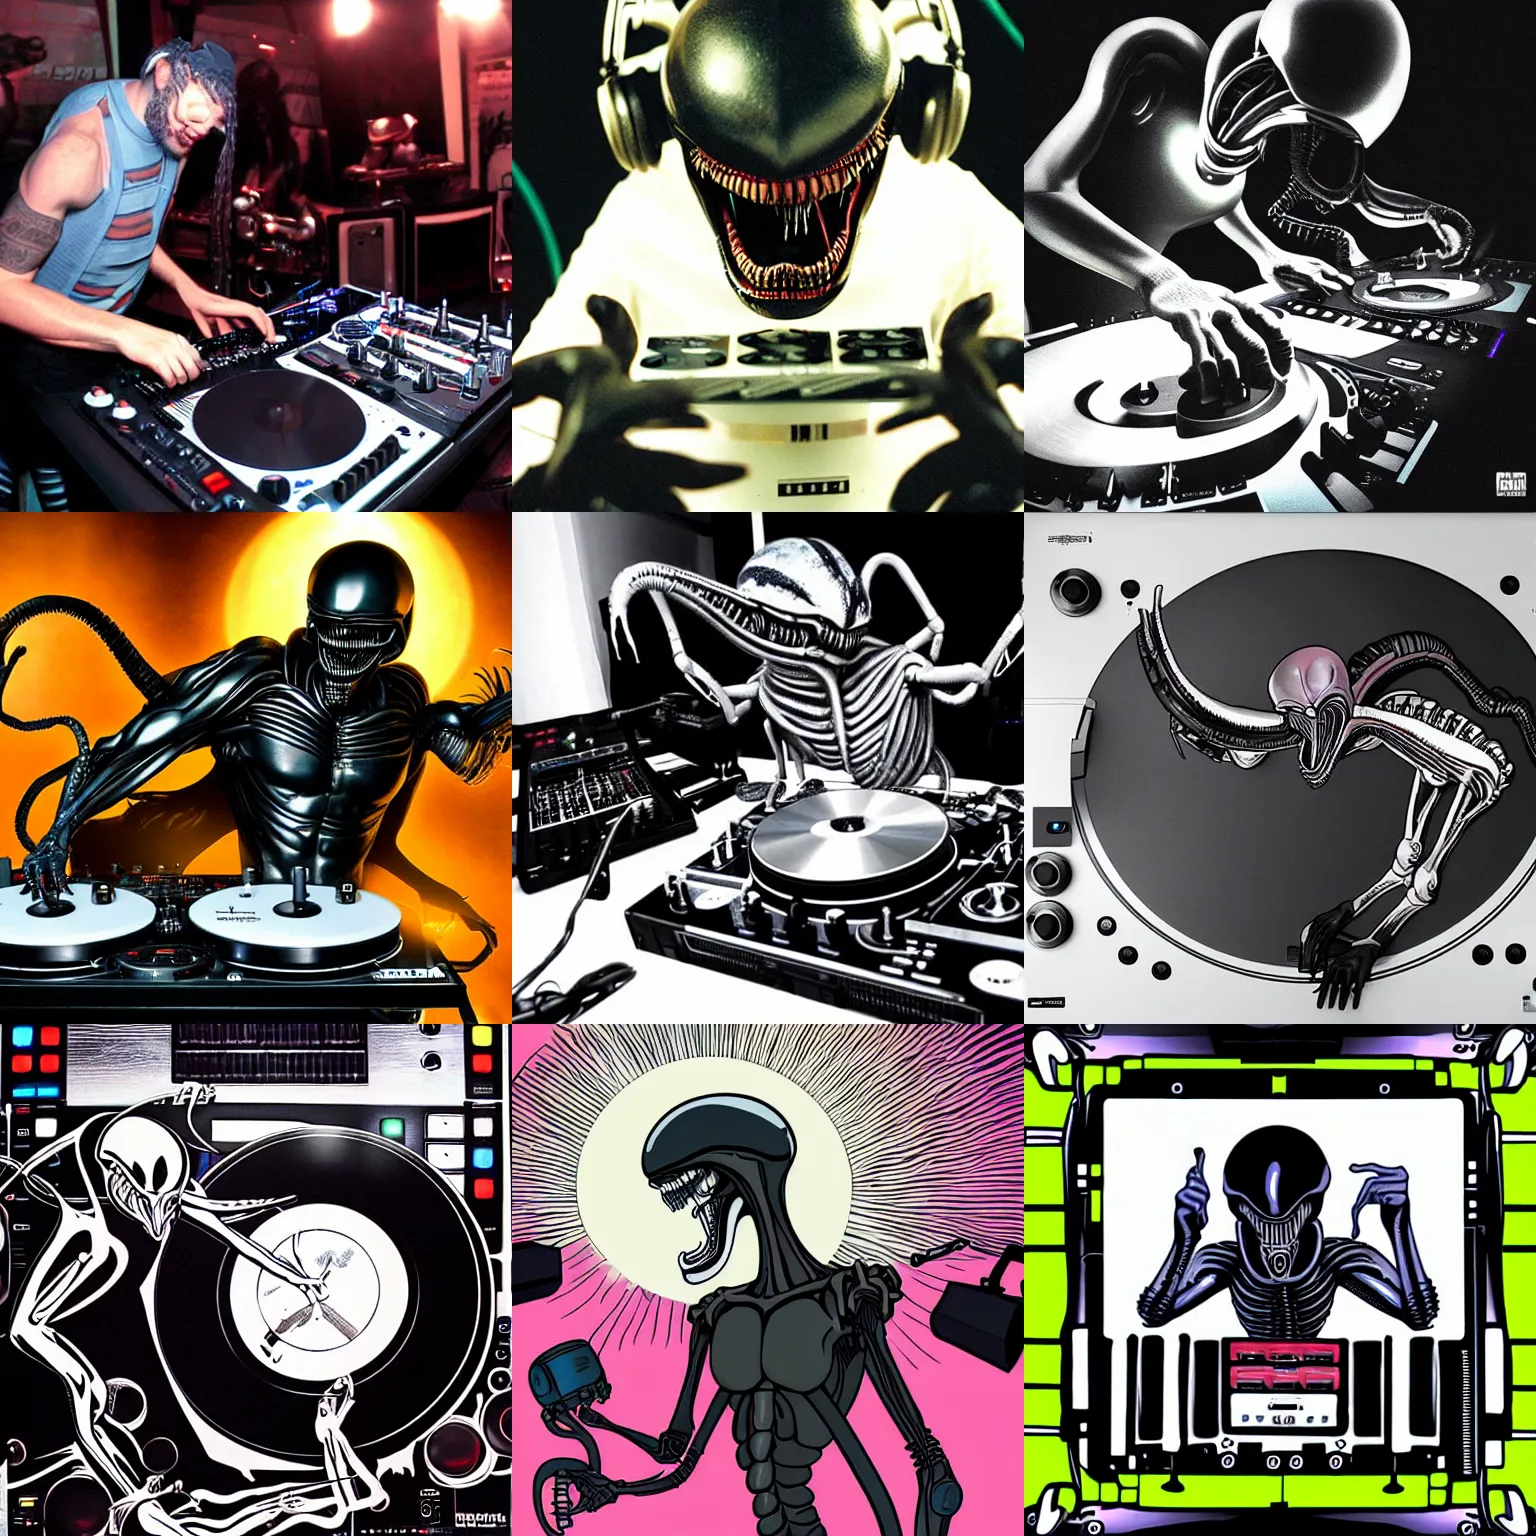 Prompt: xenomorph alien DJing with DJ turntables